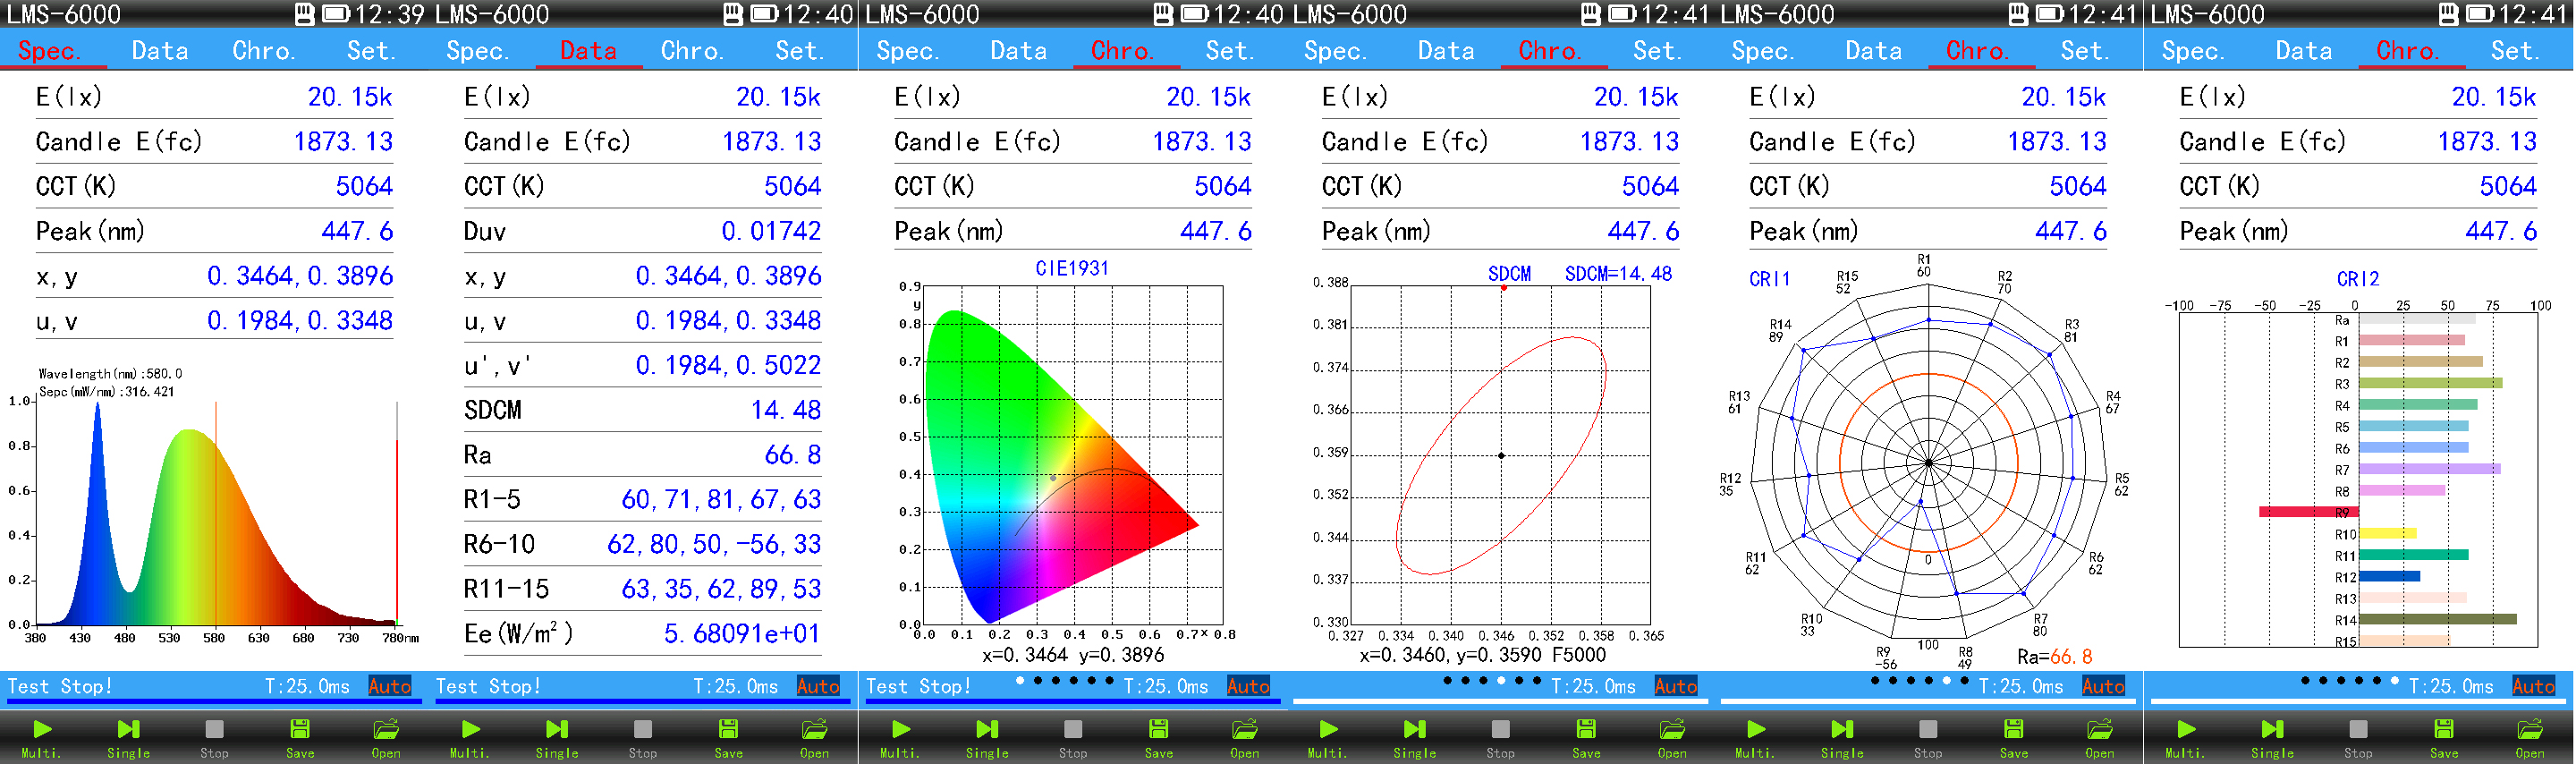 LMS-6000 Portable LED Colorimeter CCD Spectroradiometer Test Report